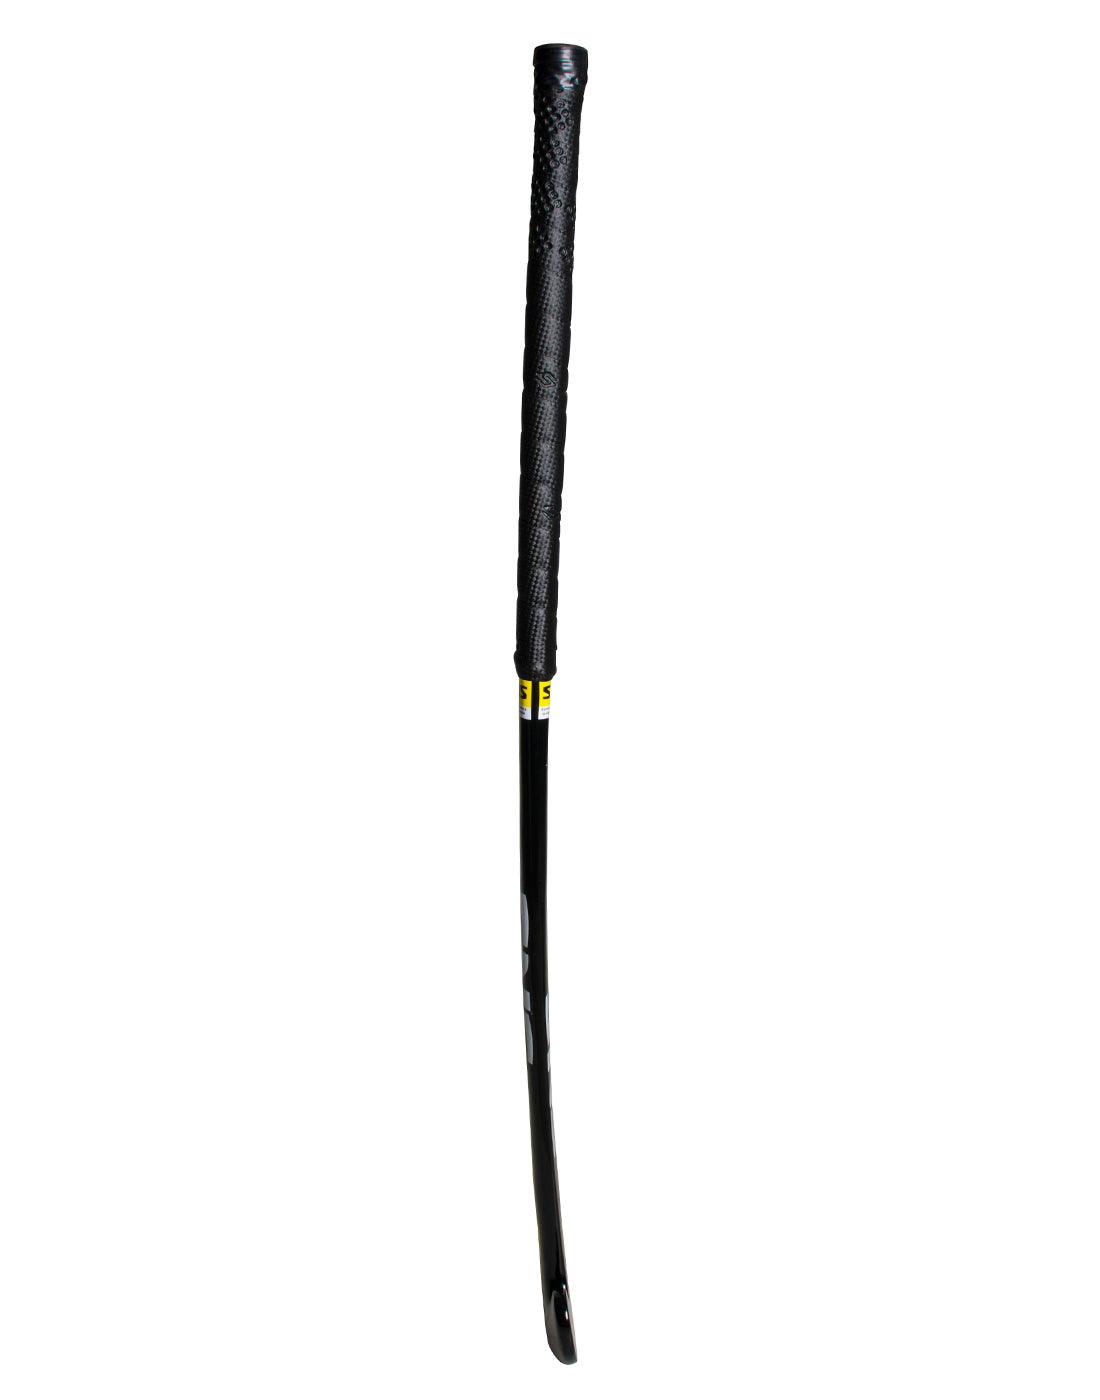 SNS Xenon Wooden Hockey Stick - Mill Sports 